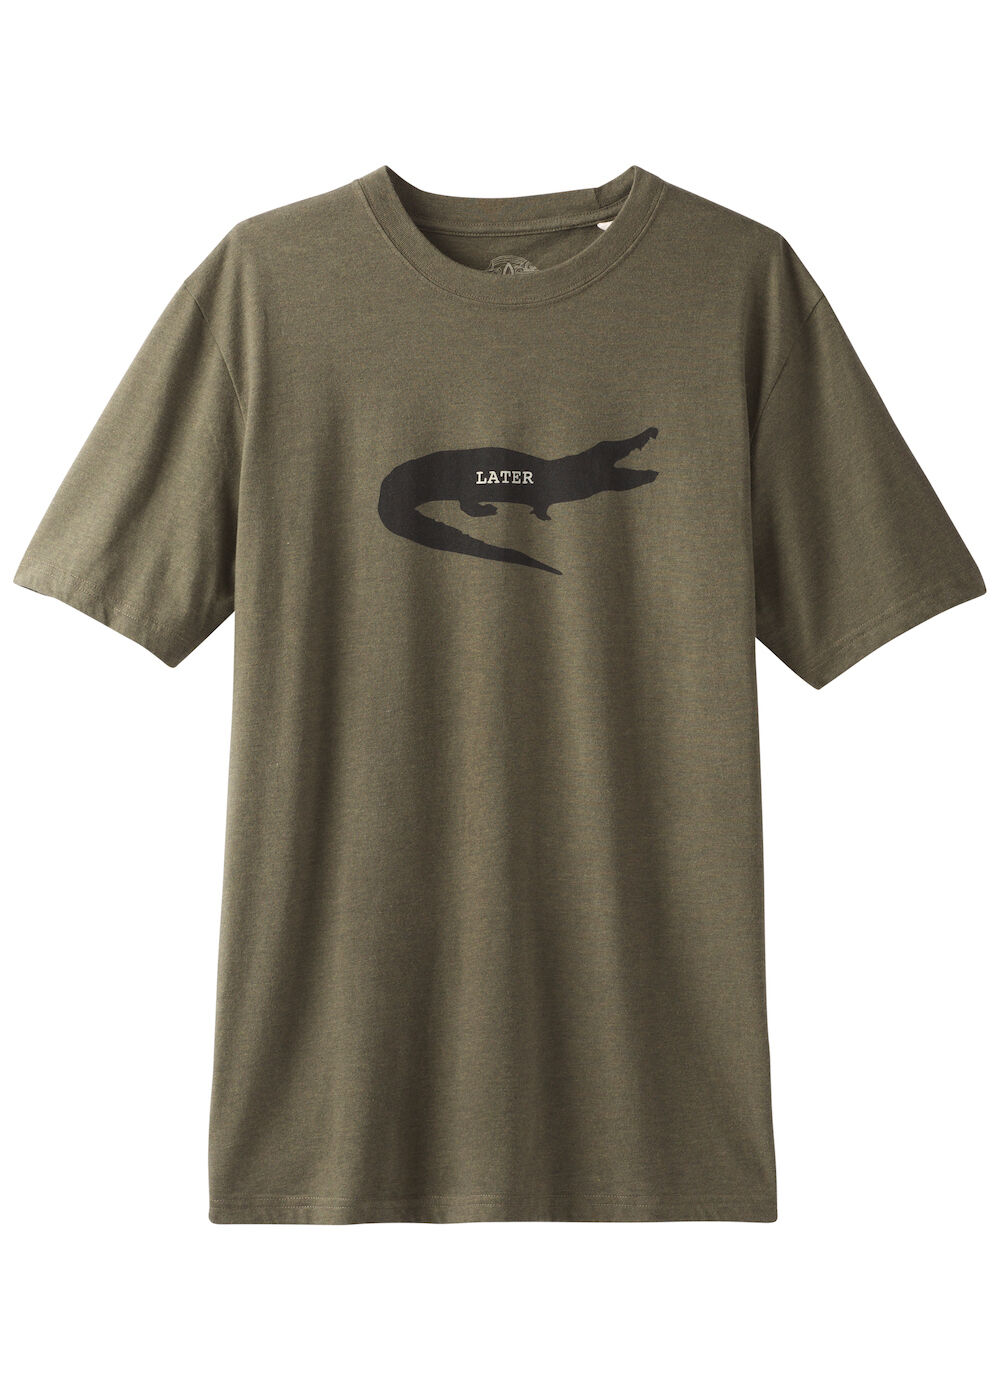 Prana - Later Gator Journeyman - T-shirt - Uomo